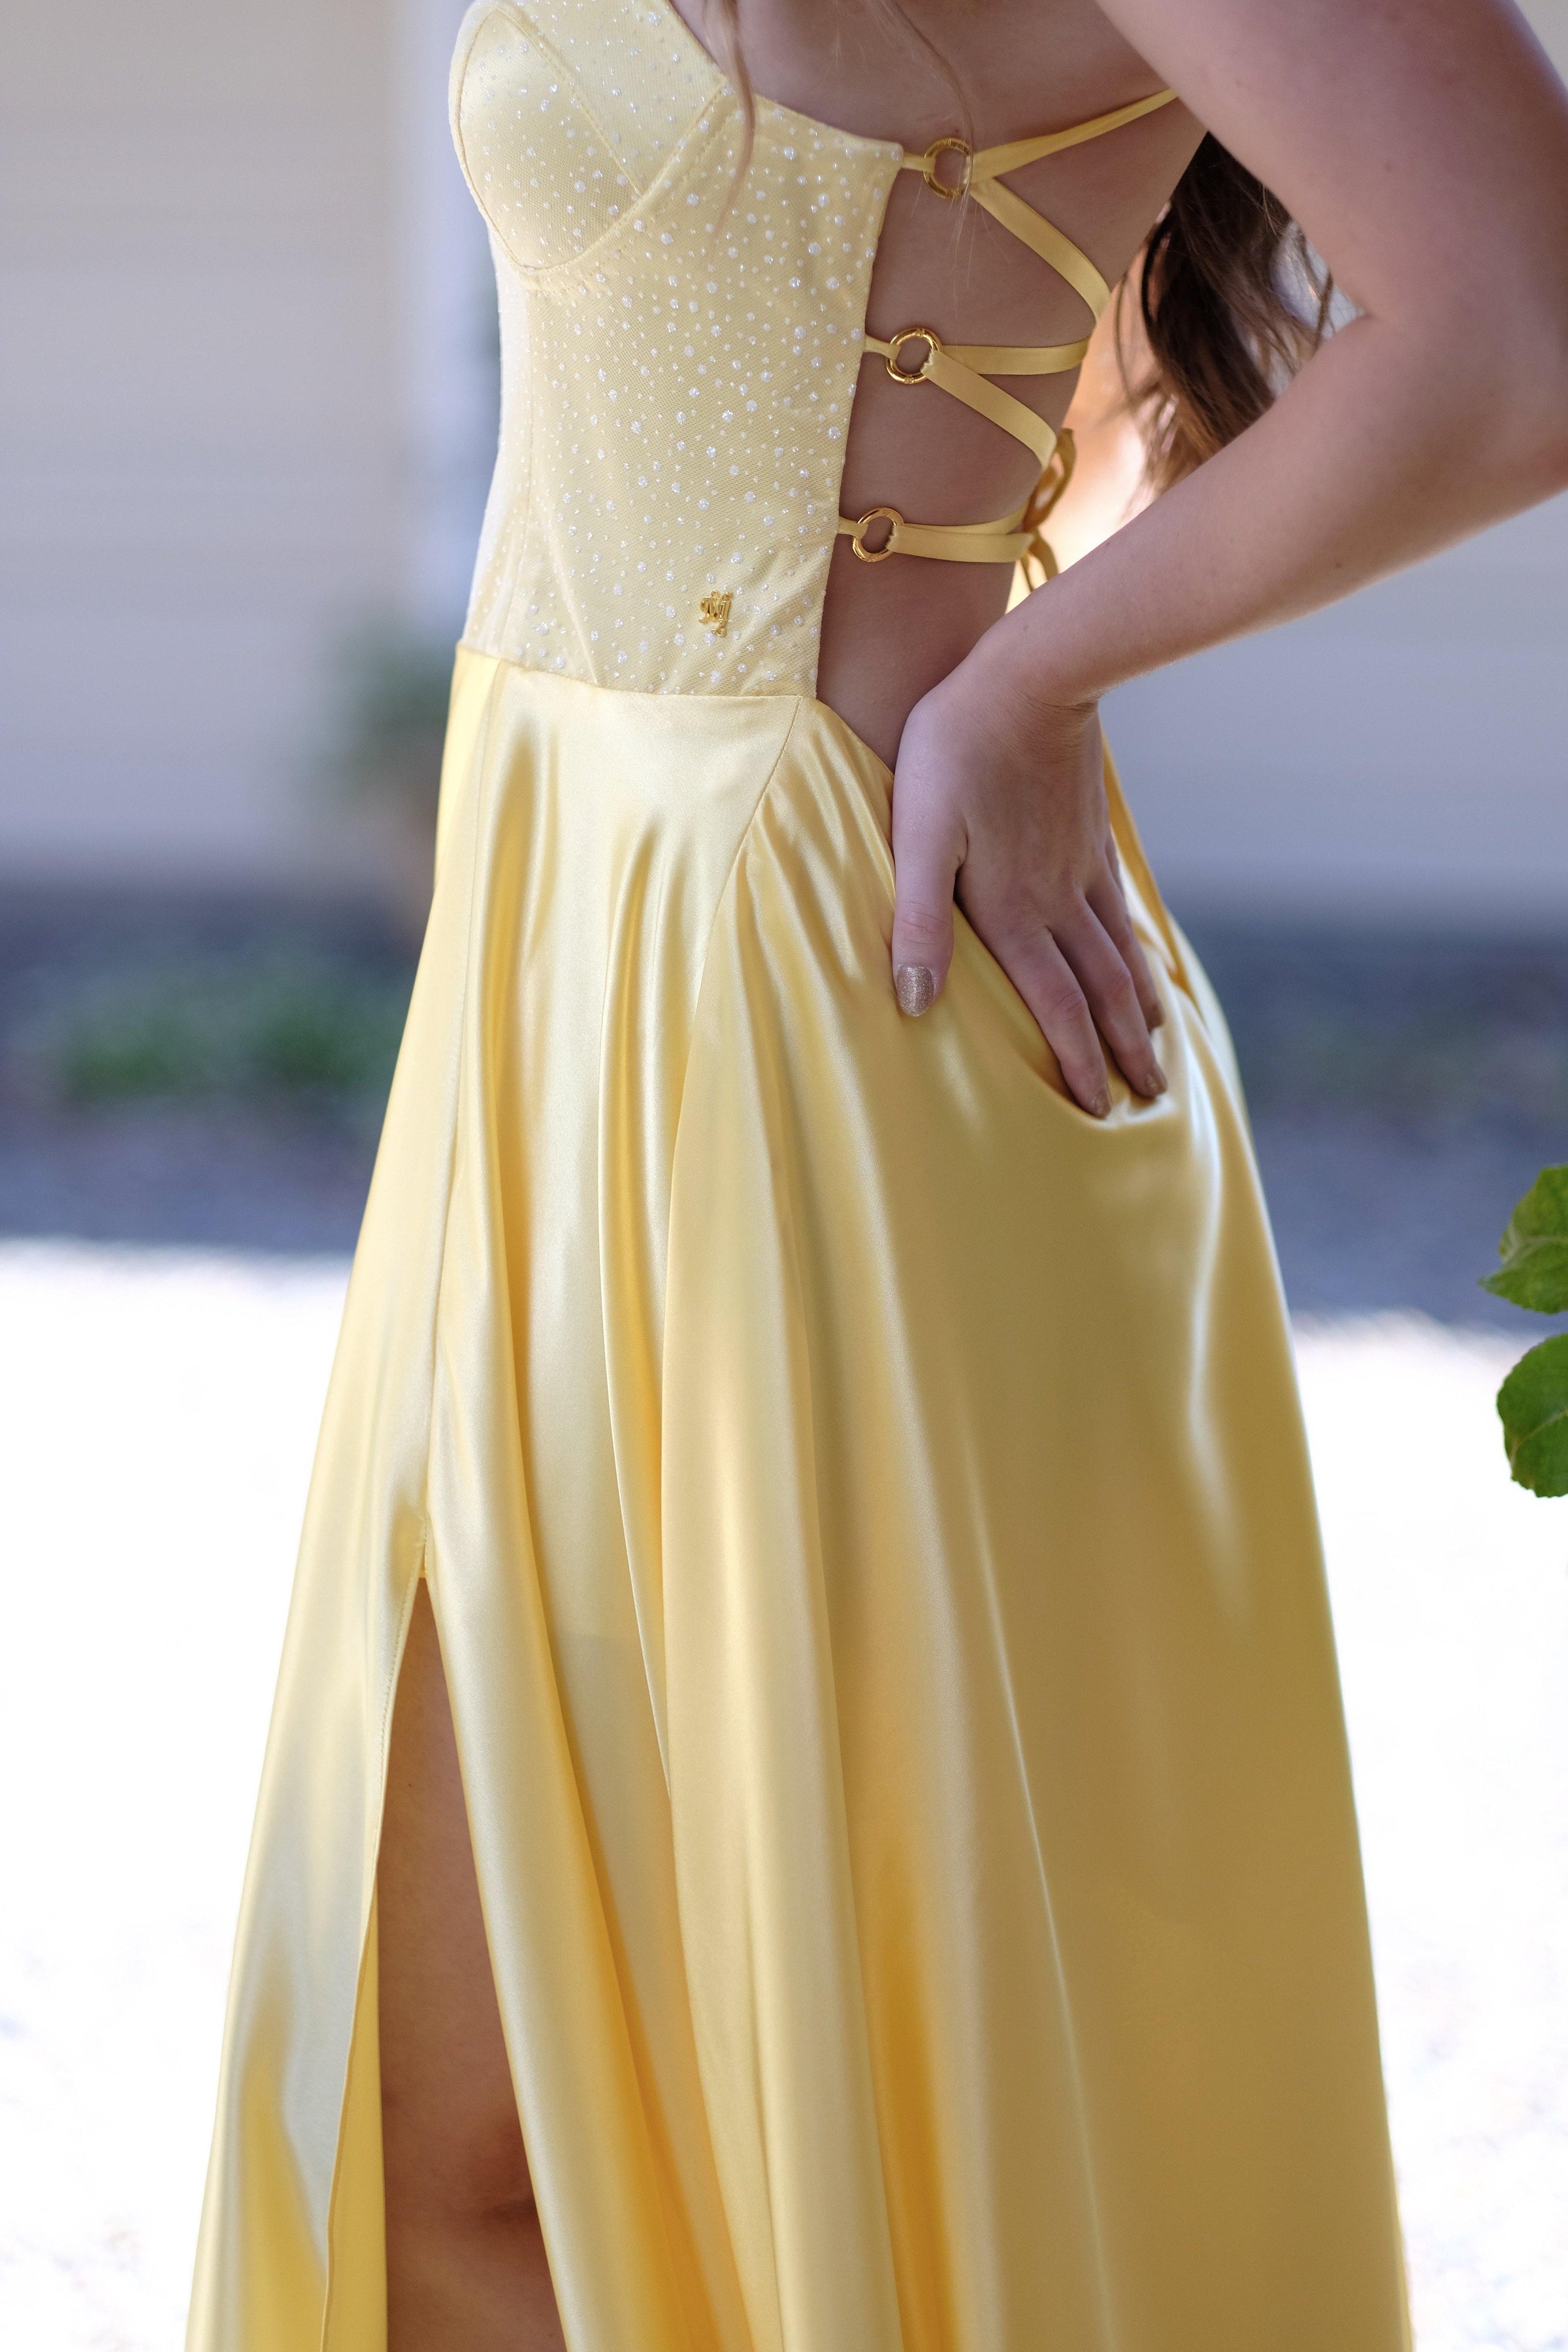 Macey Corset Strapless Dress in Yellow